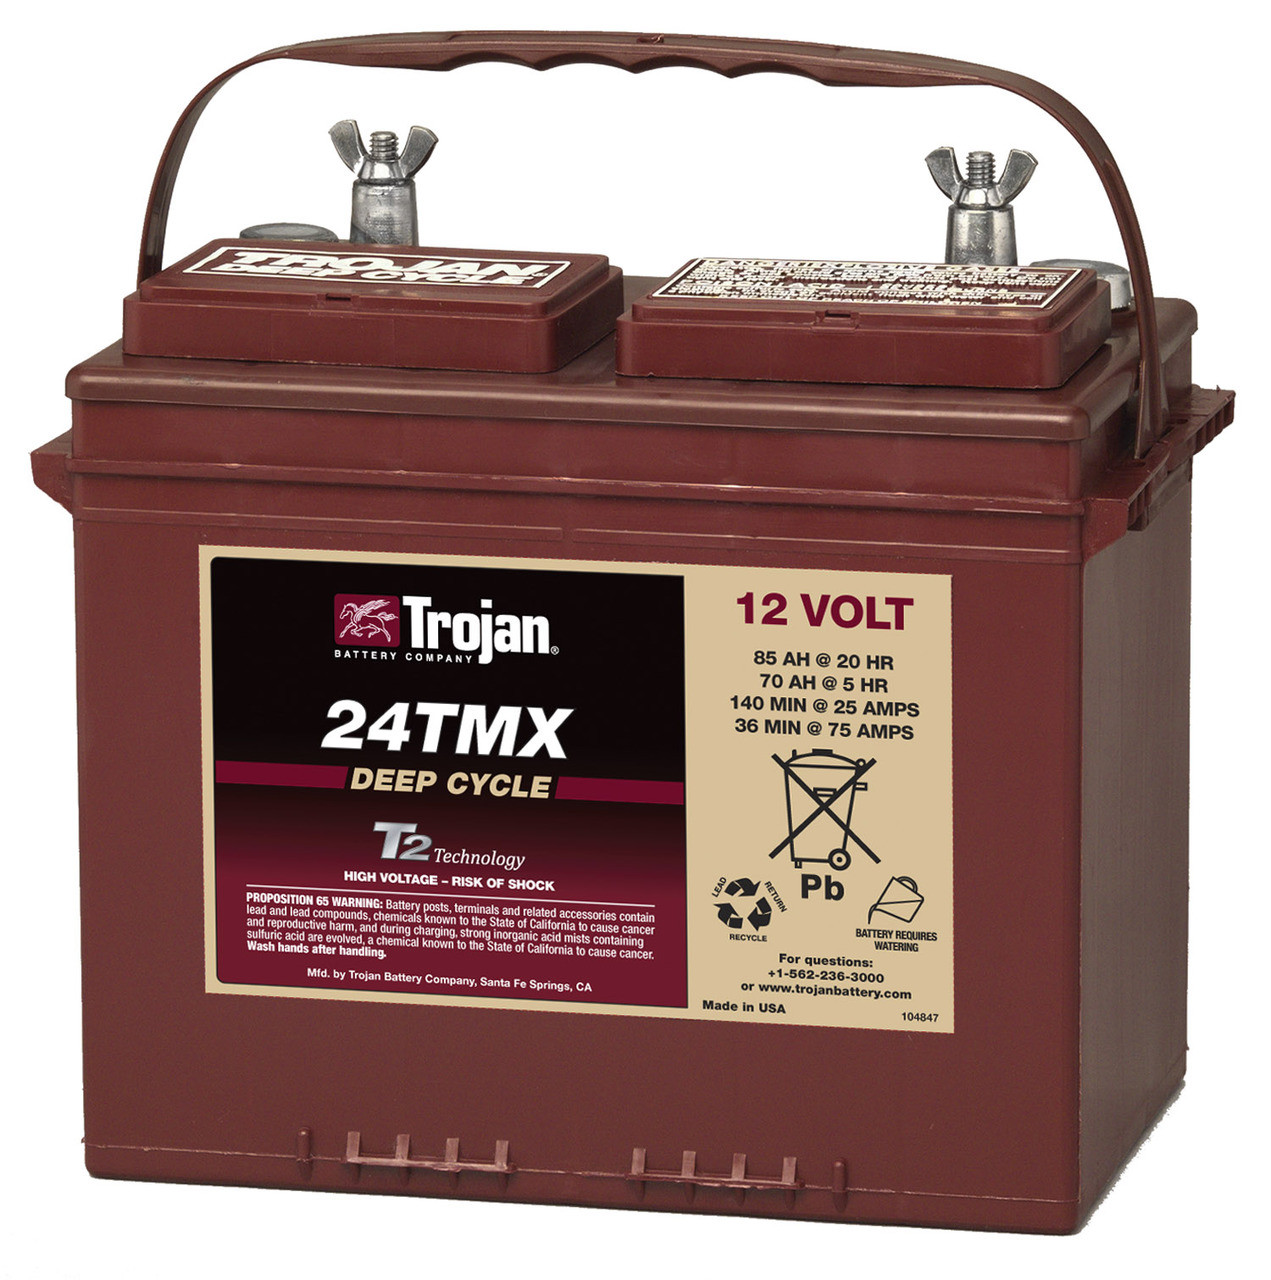 Trojan 24TMX Flooded 12V 85Ah Battery - Solaris